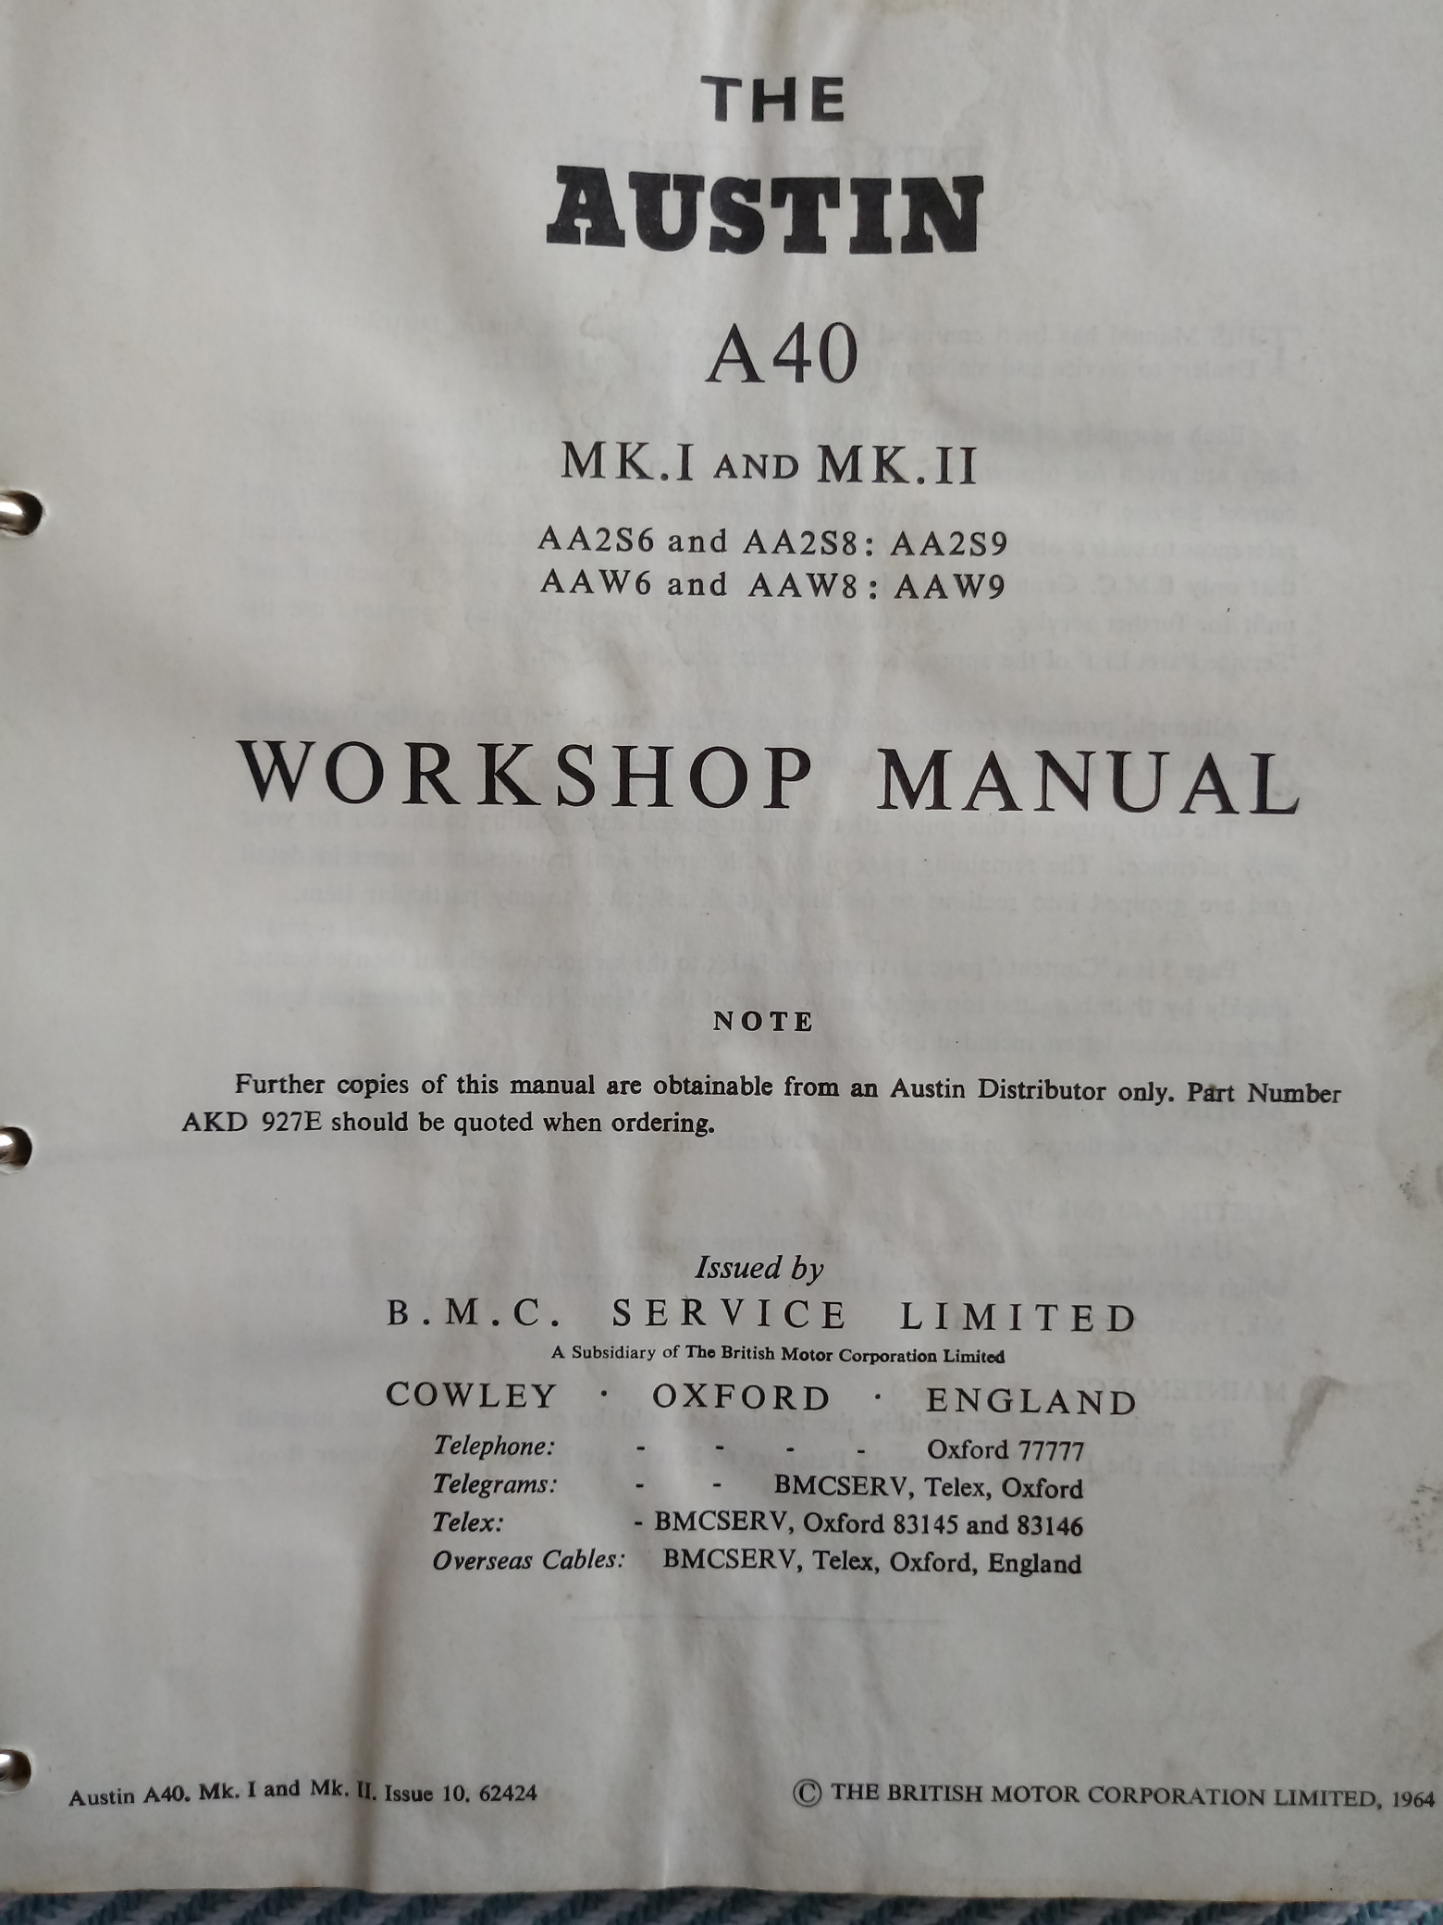 Austin A40 Marks I & II Workshop Manual ring binder Published 1964 The British Motor Corporation - Image 4 of 4